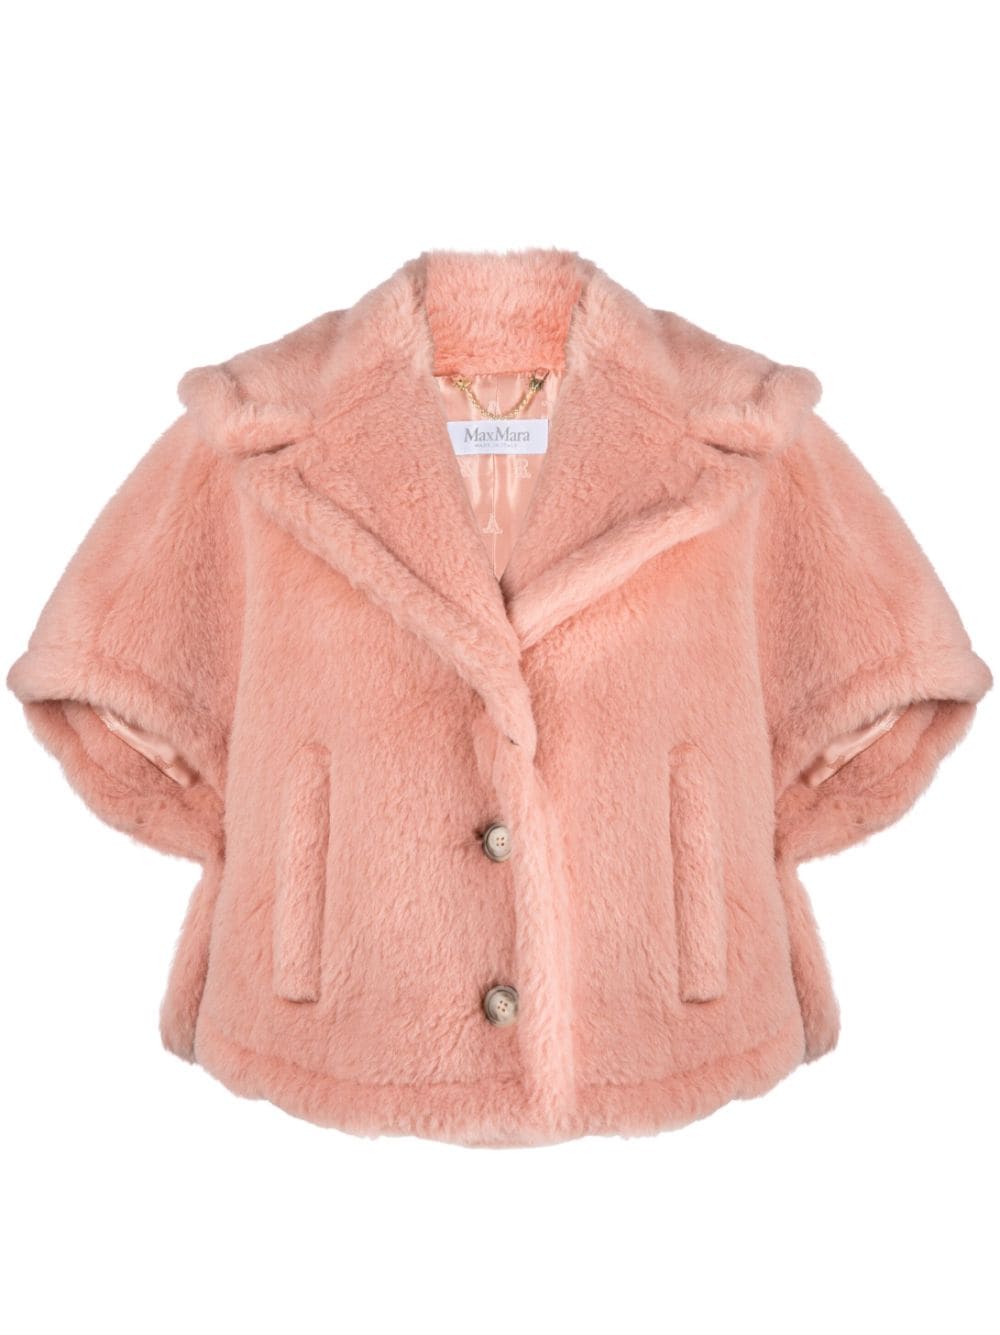 Max Mara short-sleeved wool jacket - Pink von Max Mara